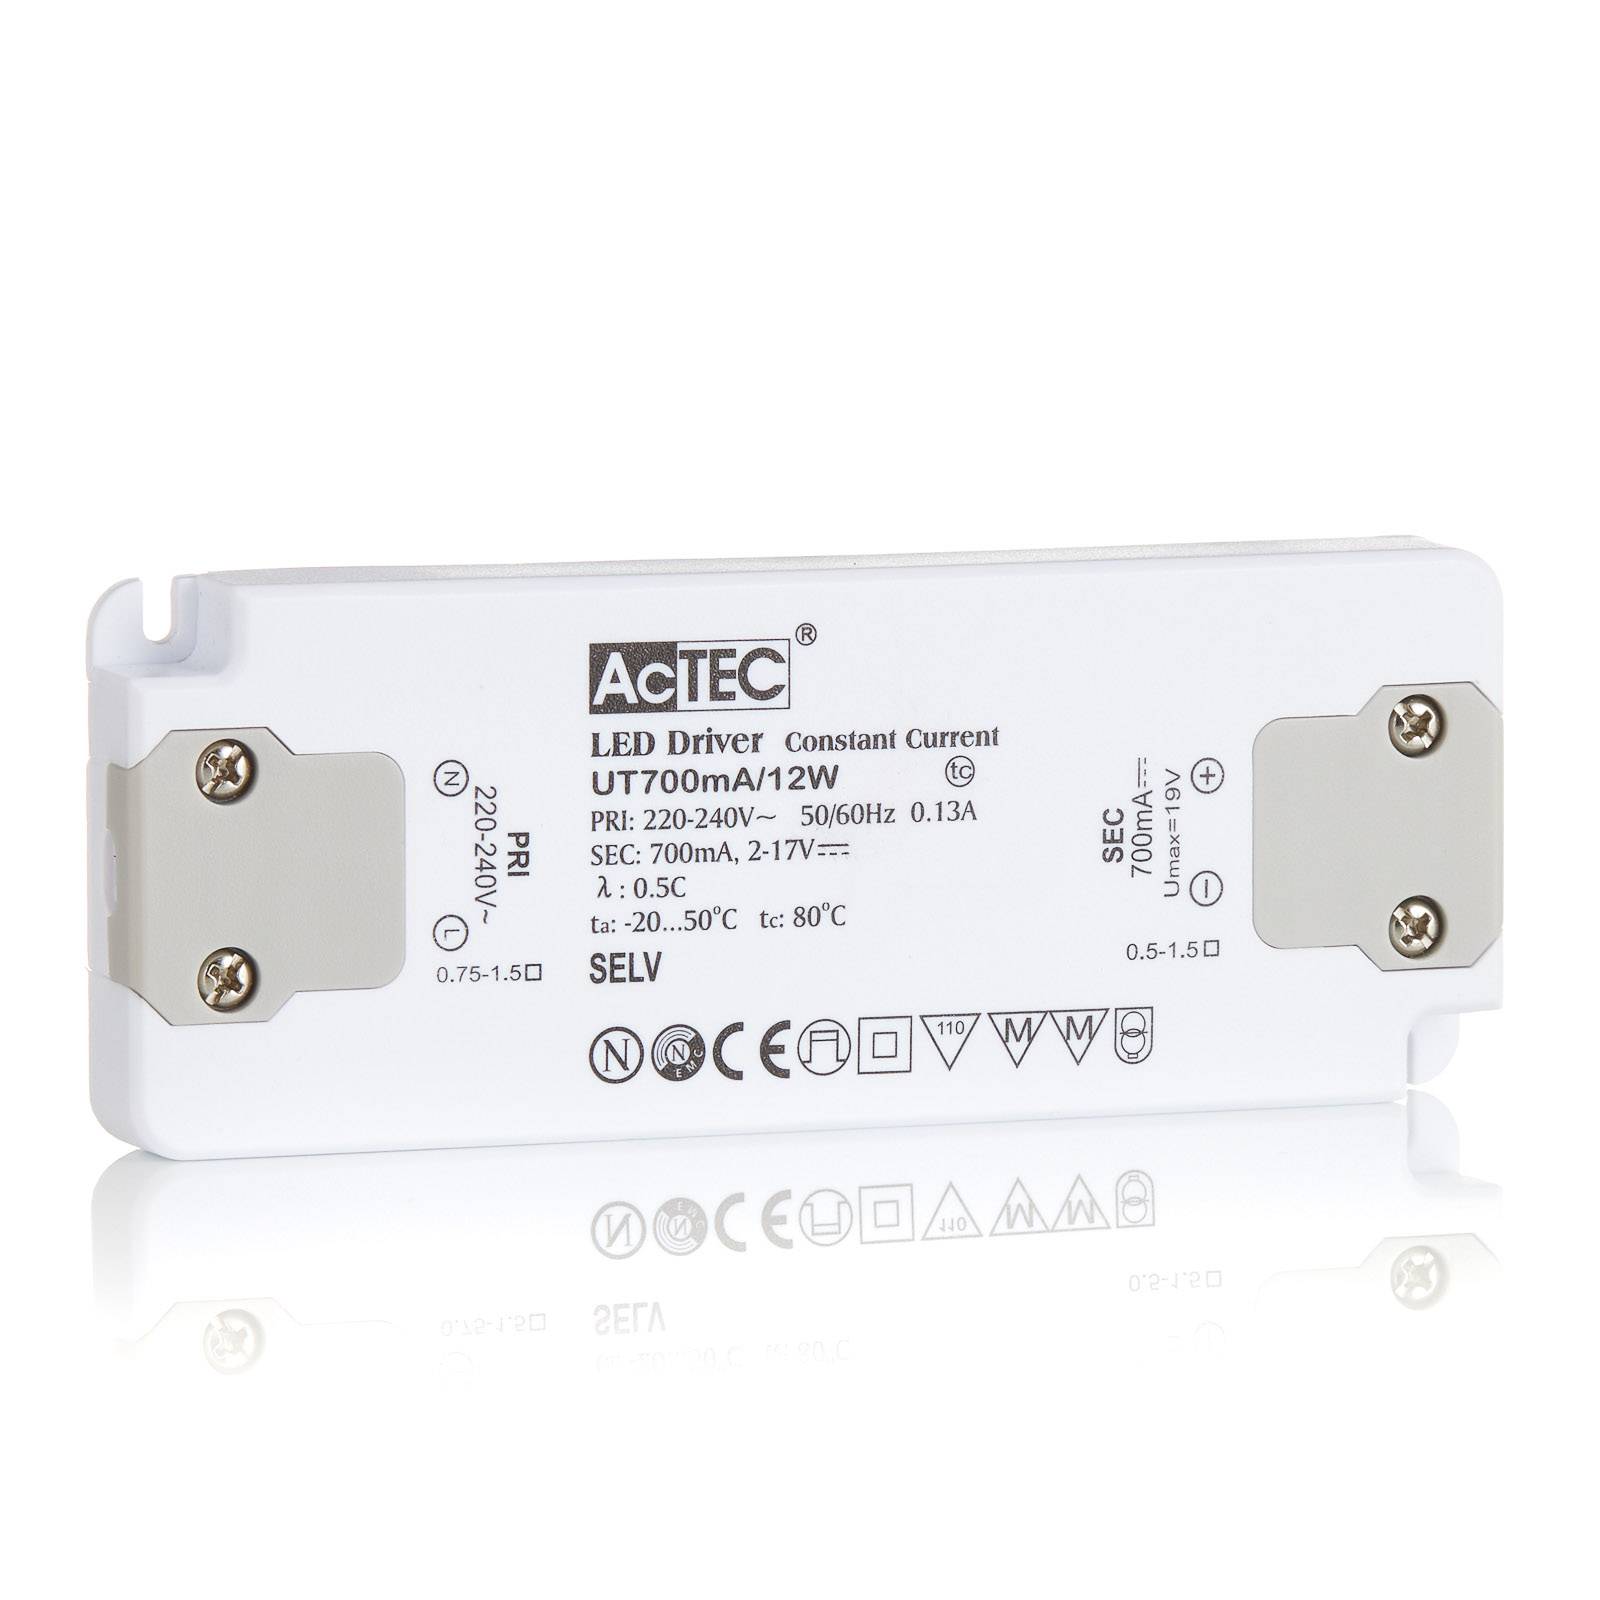 AcTEC Slim LED budič CC 700mA, 12W